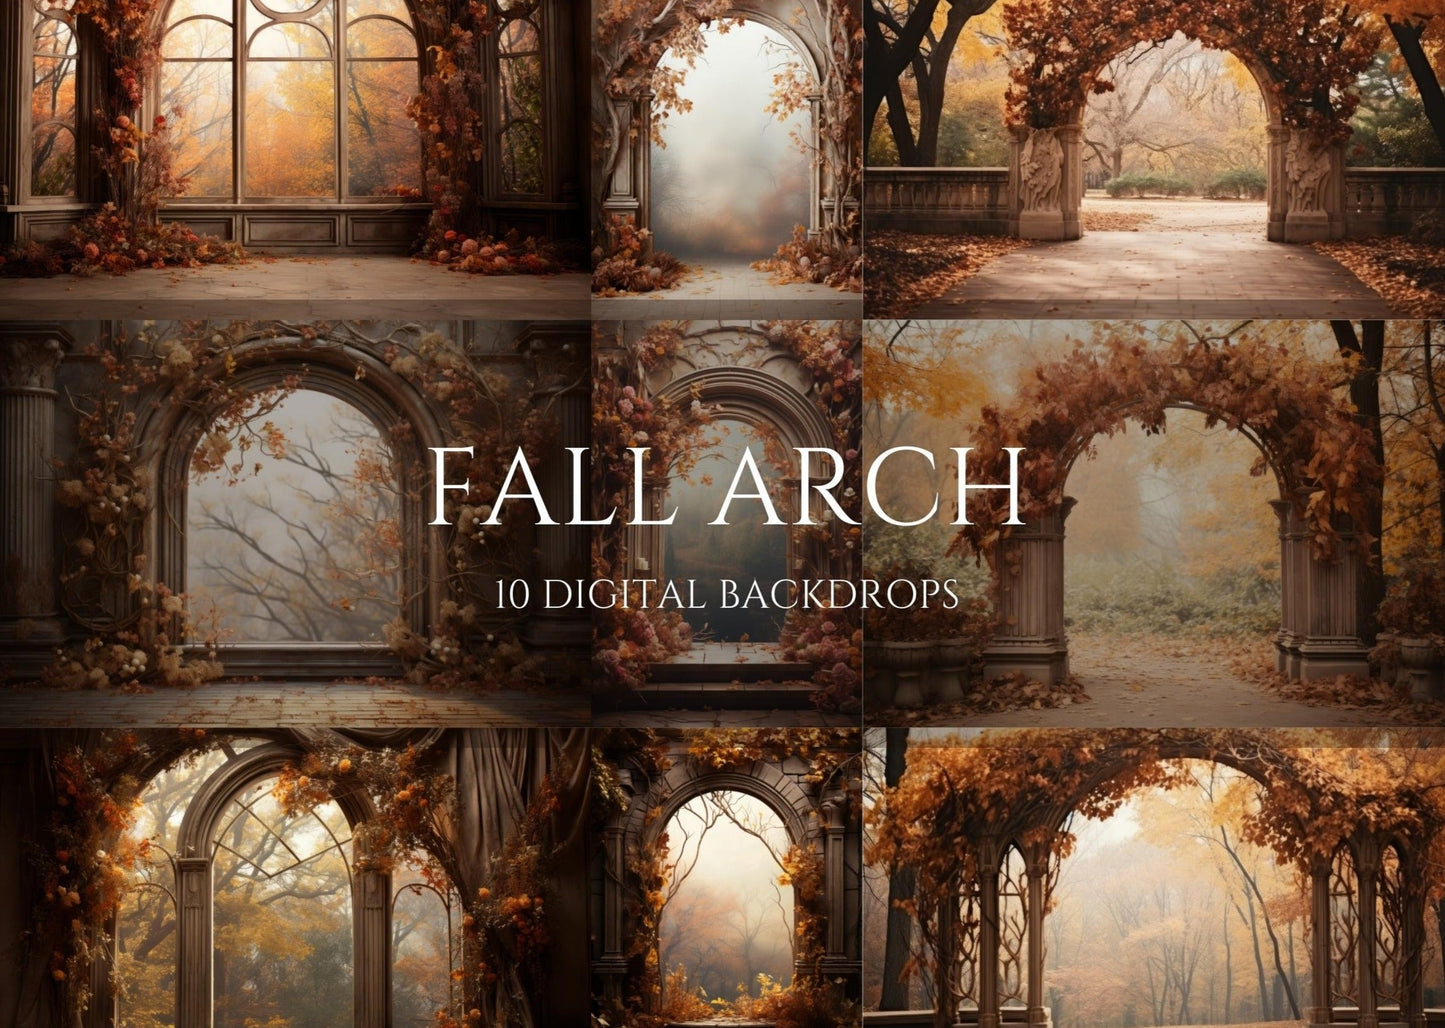 Fall Arch Digital Backdrops